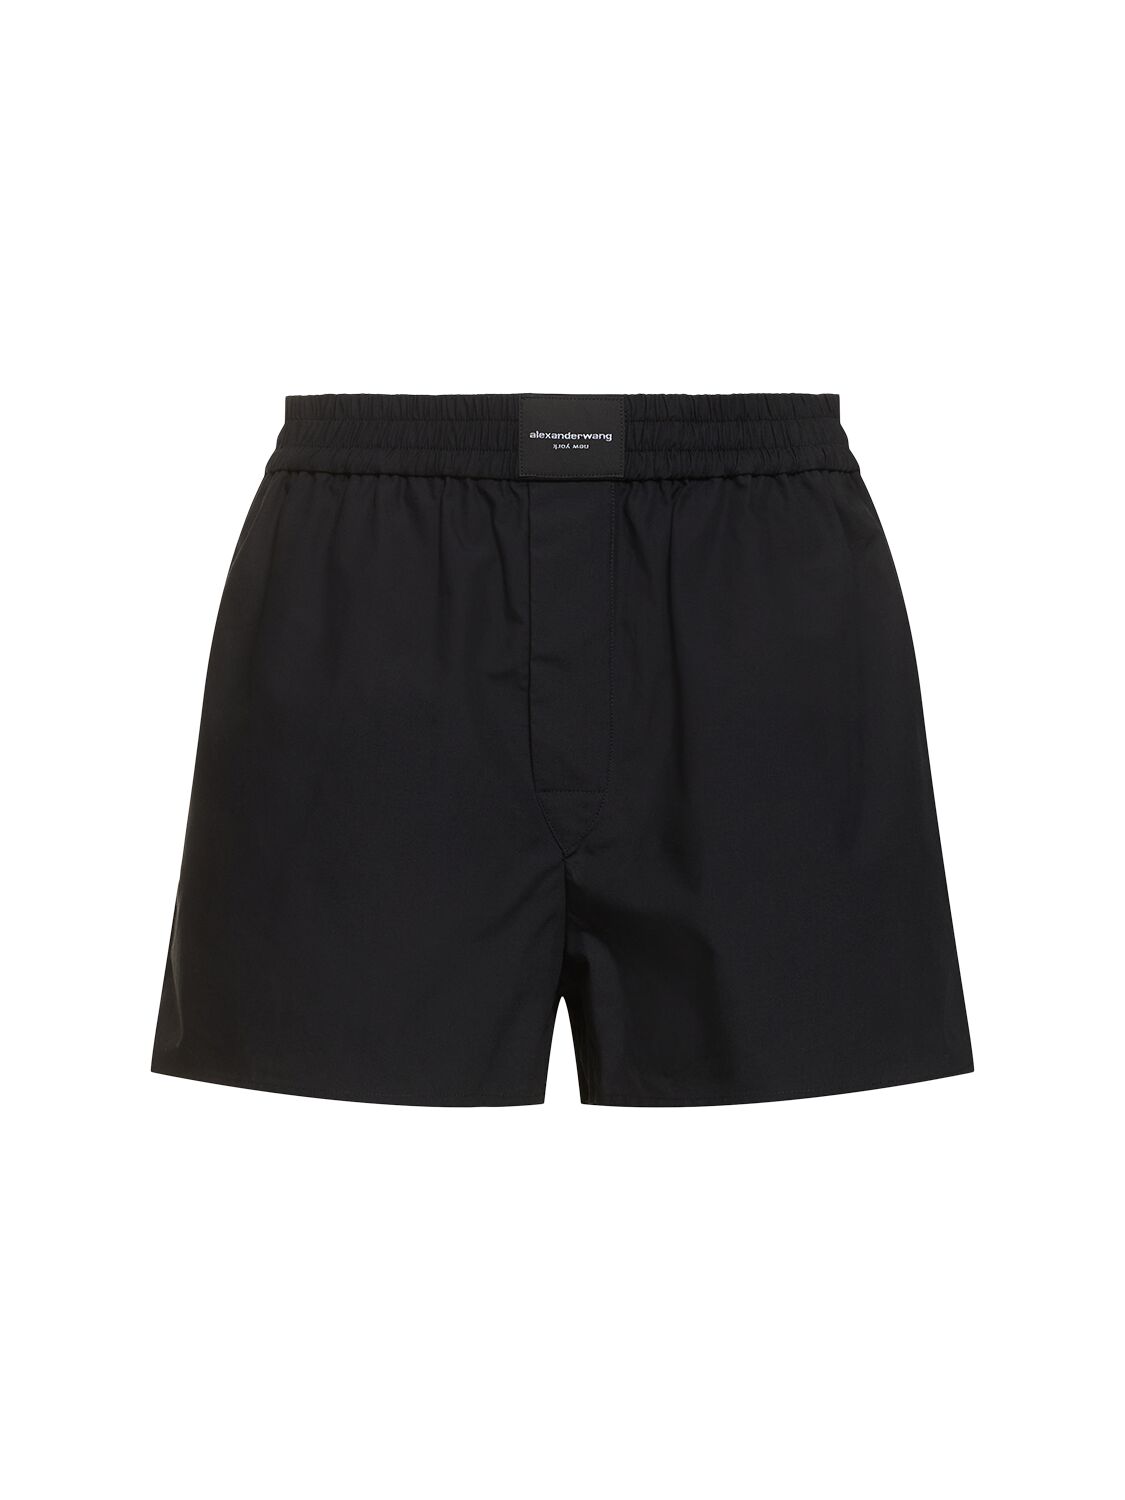 Shop Alexander Wang Classic Cotton Boxer Shorts In Black